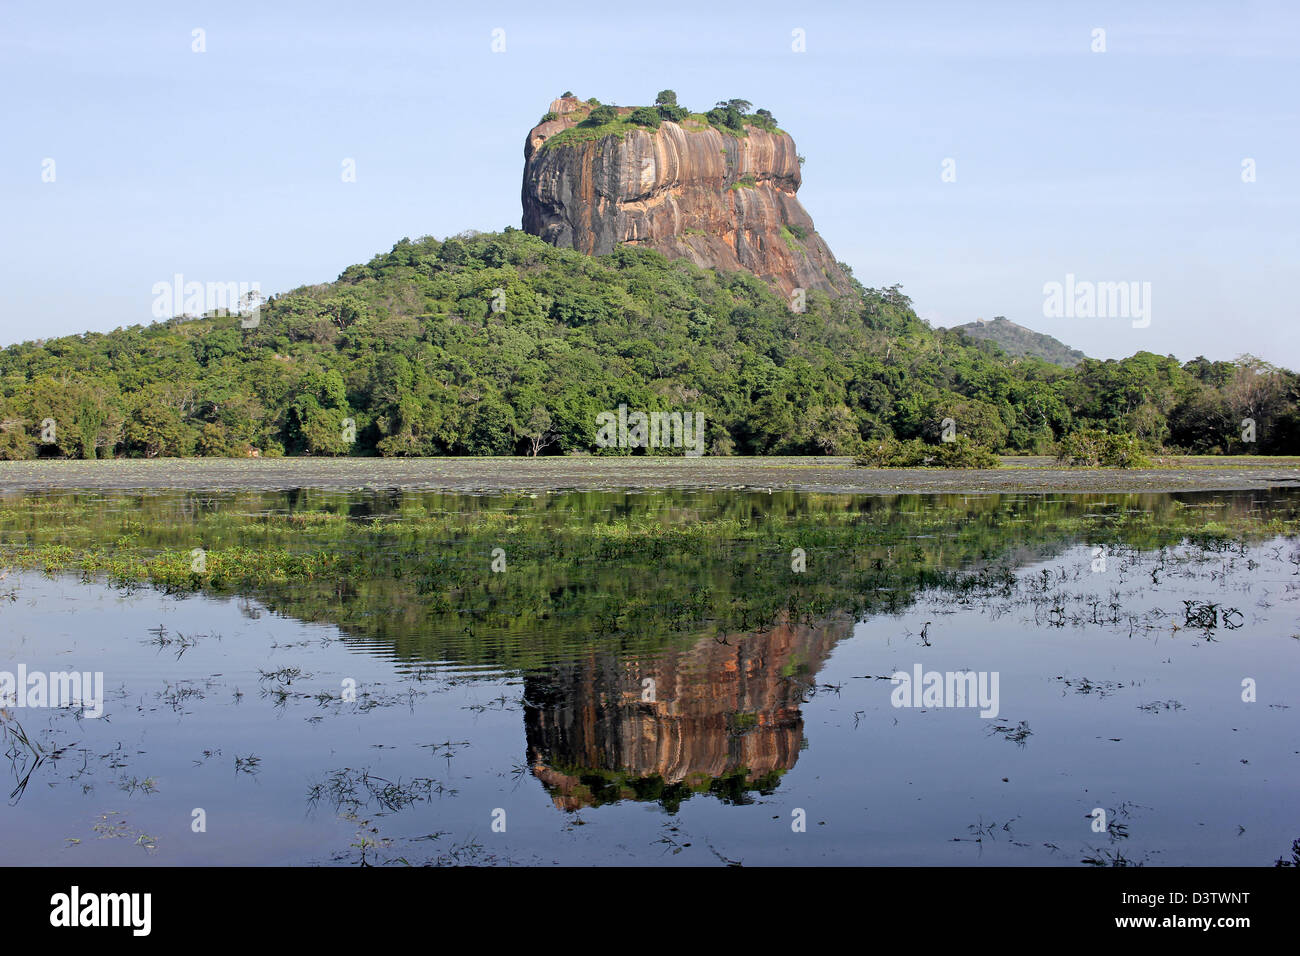 Reflection of Sigiriya (Lion's Rock) in Tank (Reservoir) Stock Photo